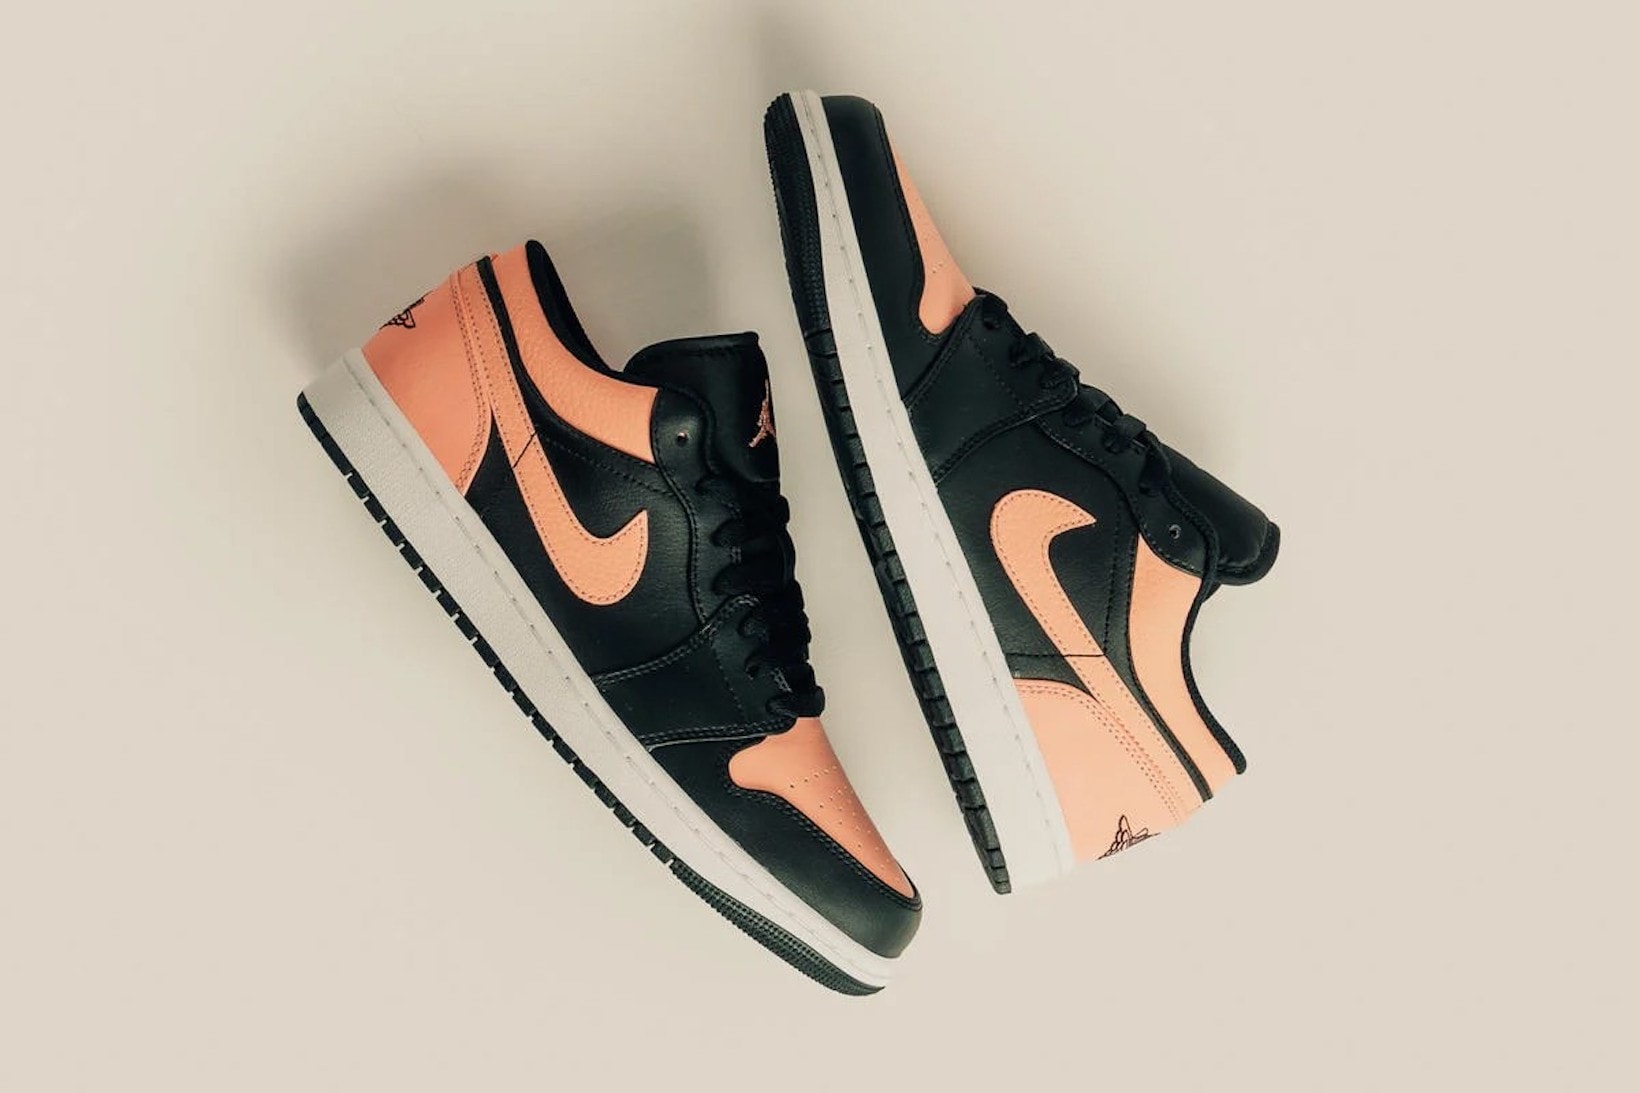 nike air jordan 1 aj1 arctic orange peach black colorway footwear shoes kicks sneakerhead lateral